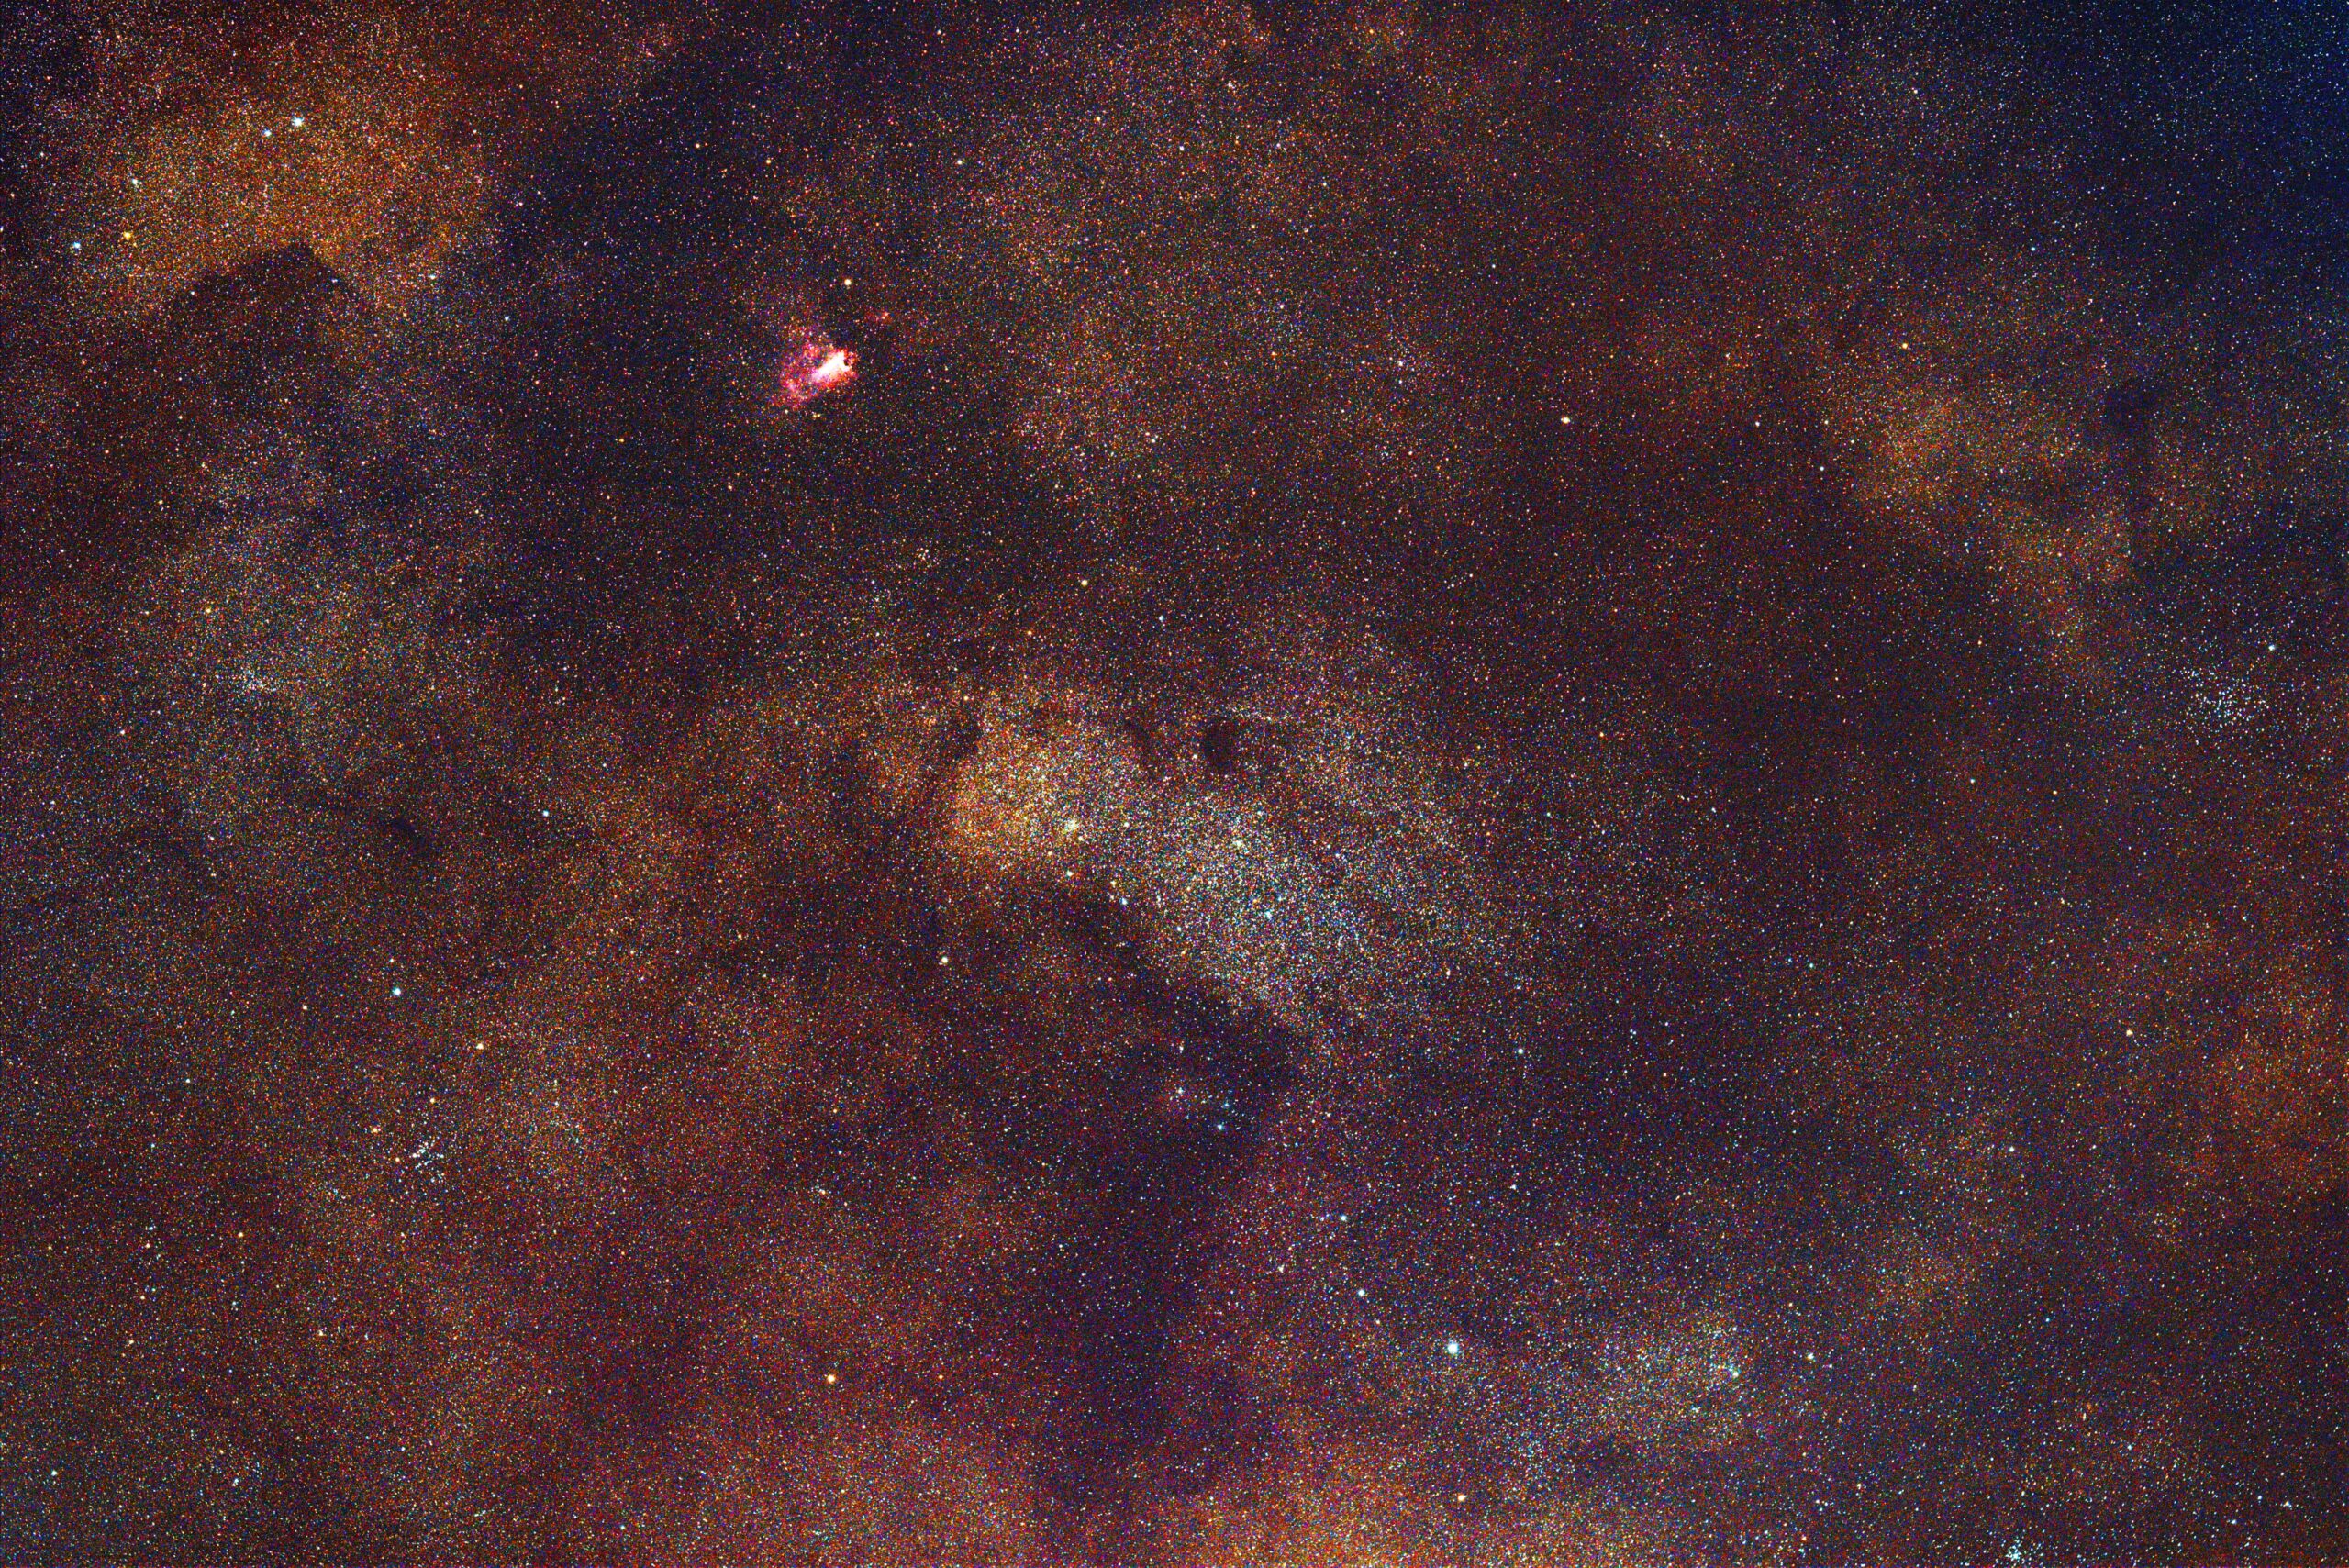 Swan Nebula and Small Saggitarius Star Cloud photographed with Rokinon/Samyang 135mm f/2 lens.